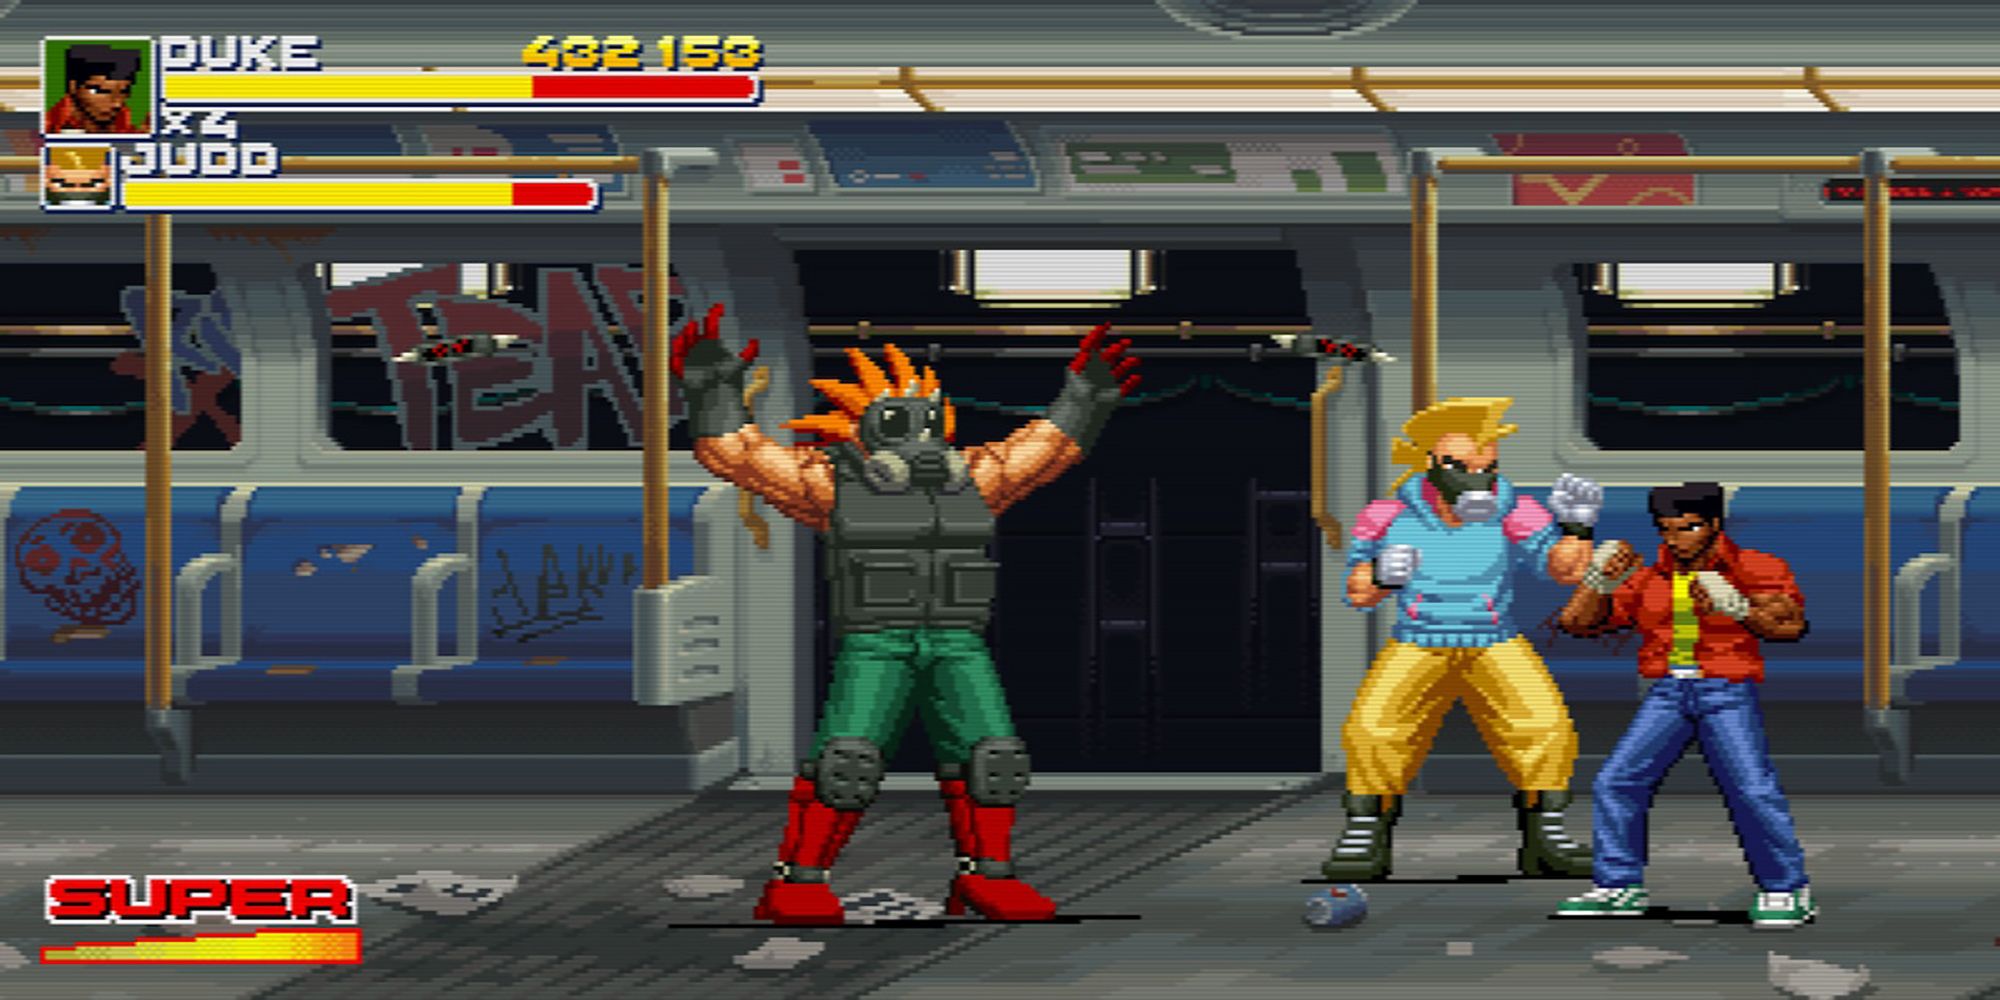 Diesel and his lackey, Judd, approach Duke in a subway car brawl in Final Vendetta.